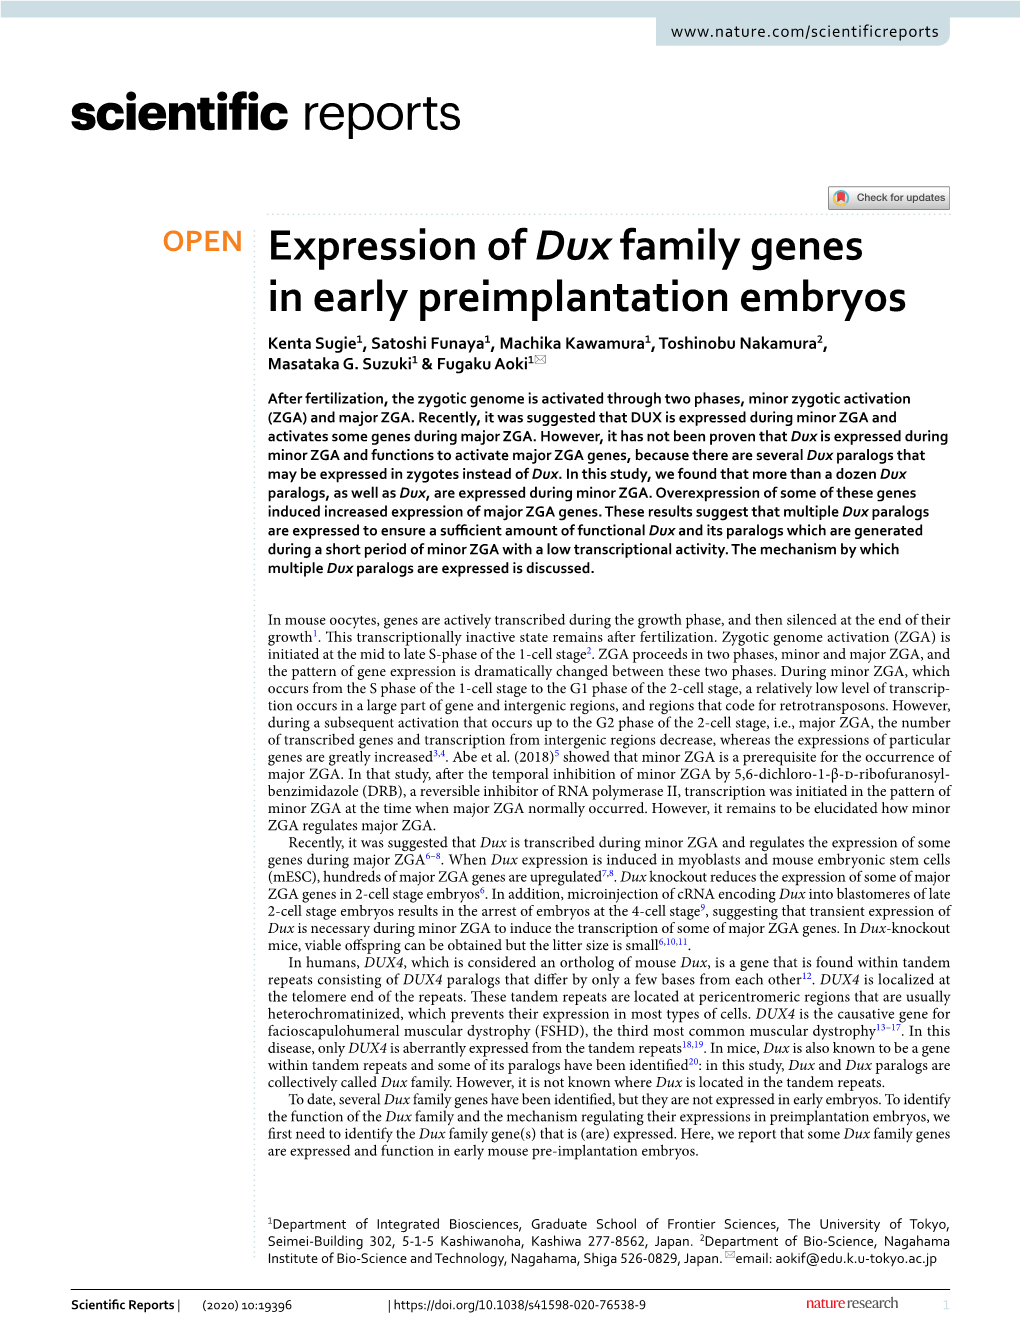 Expression of Dux Family Genes in Early Preimplantation Embryos Kenta Sugie1, Satoshi Funaya1, Machika Kawamura1, Toshinobu Nakamura2, Masataka G